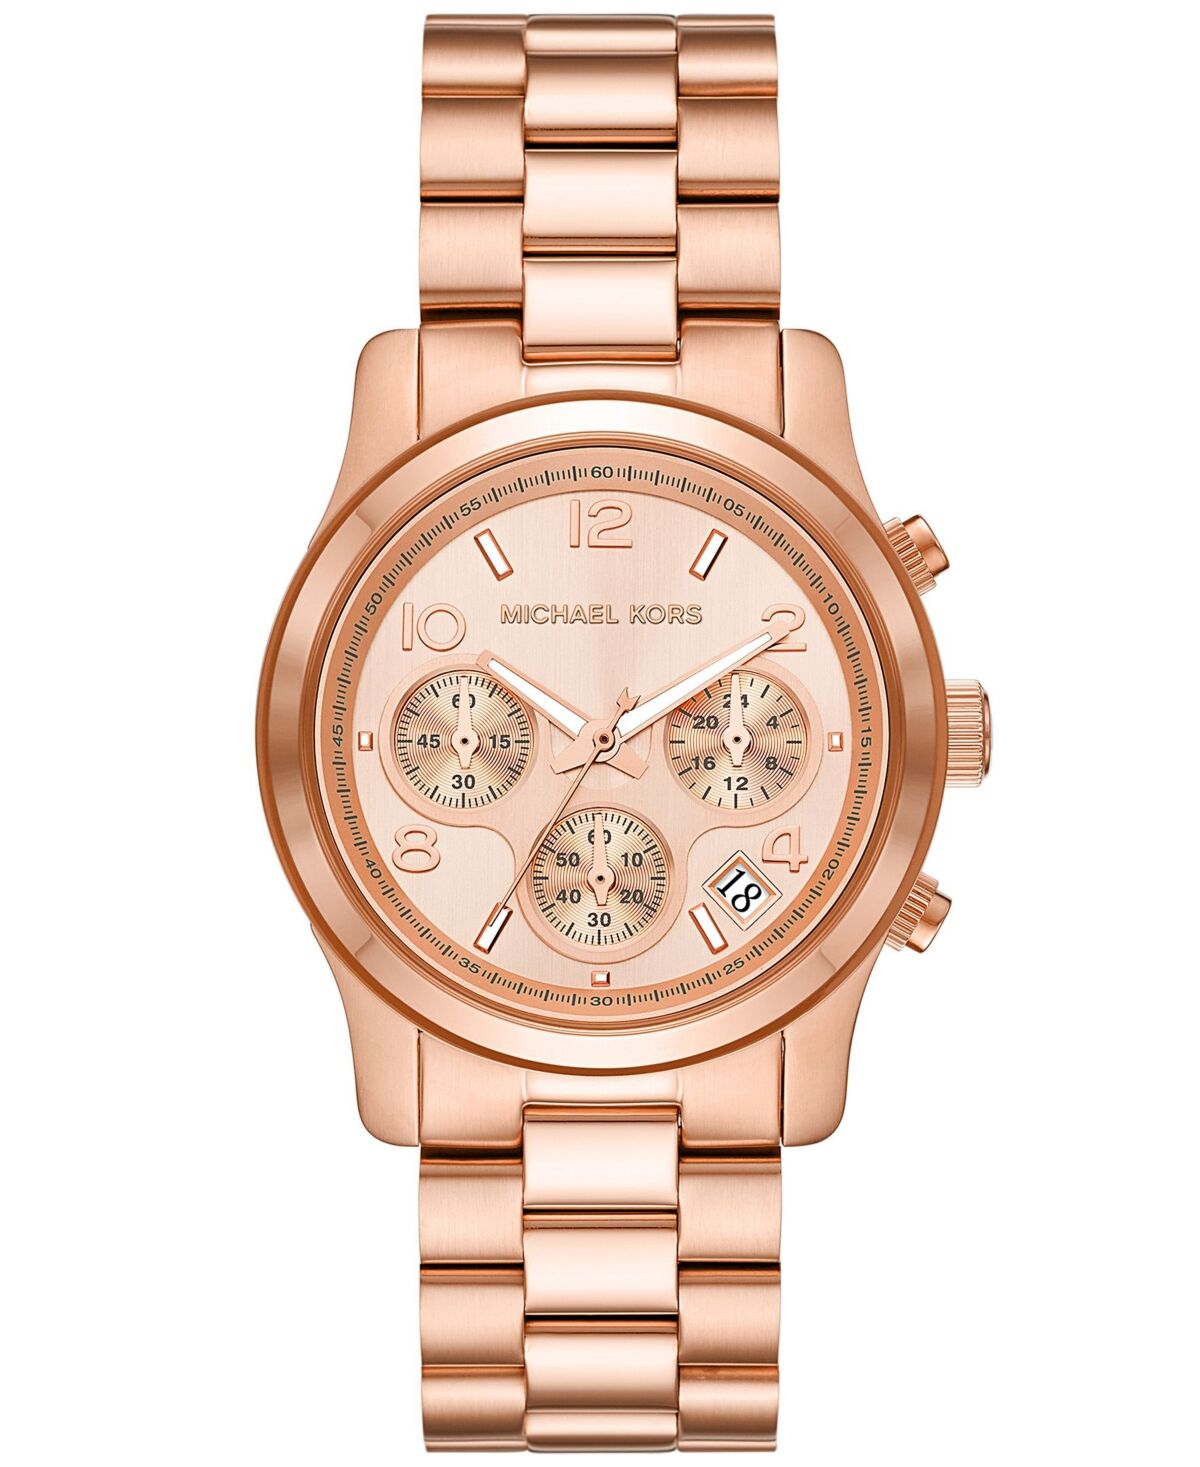 Michael Kors Women's Runway Chronograph Rose Gold-Tone Stainless Steel Bracelet Watch, 38mm - Rose Gold